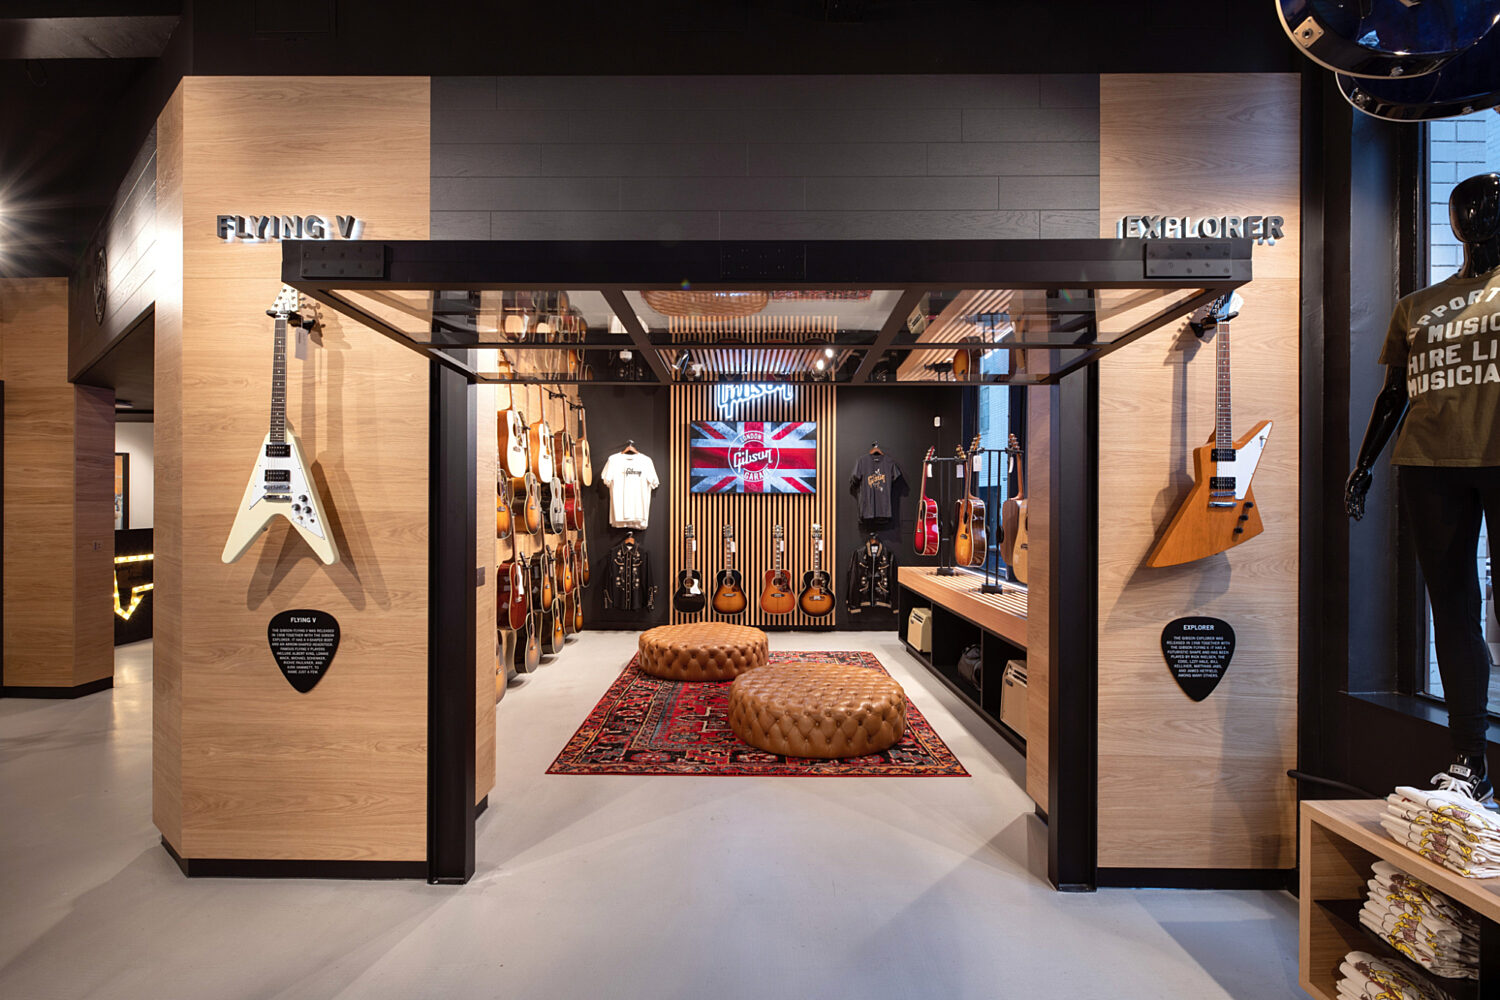 Gibson showroom with wall mounted guitars